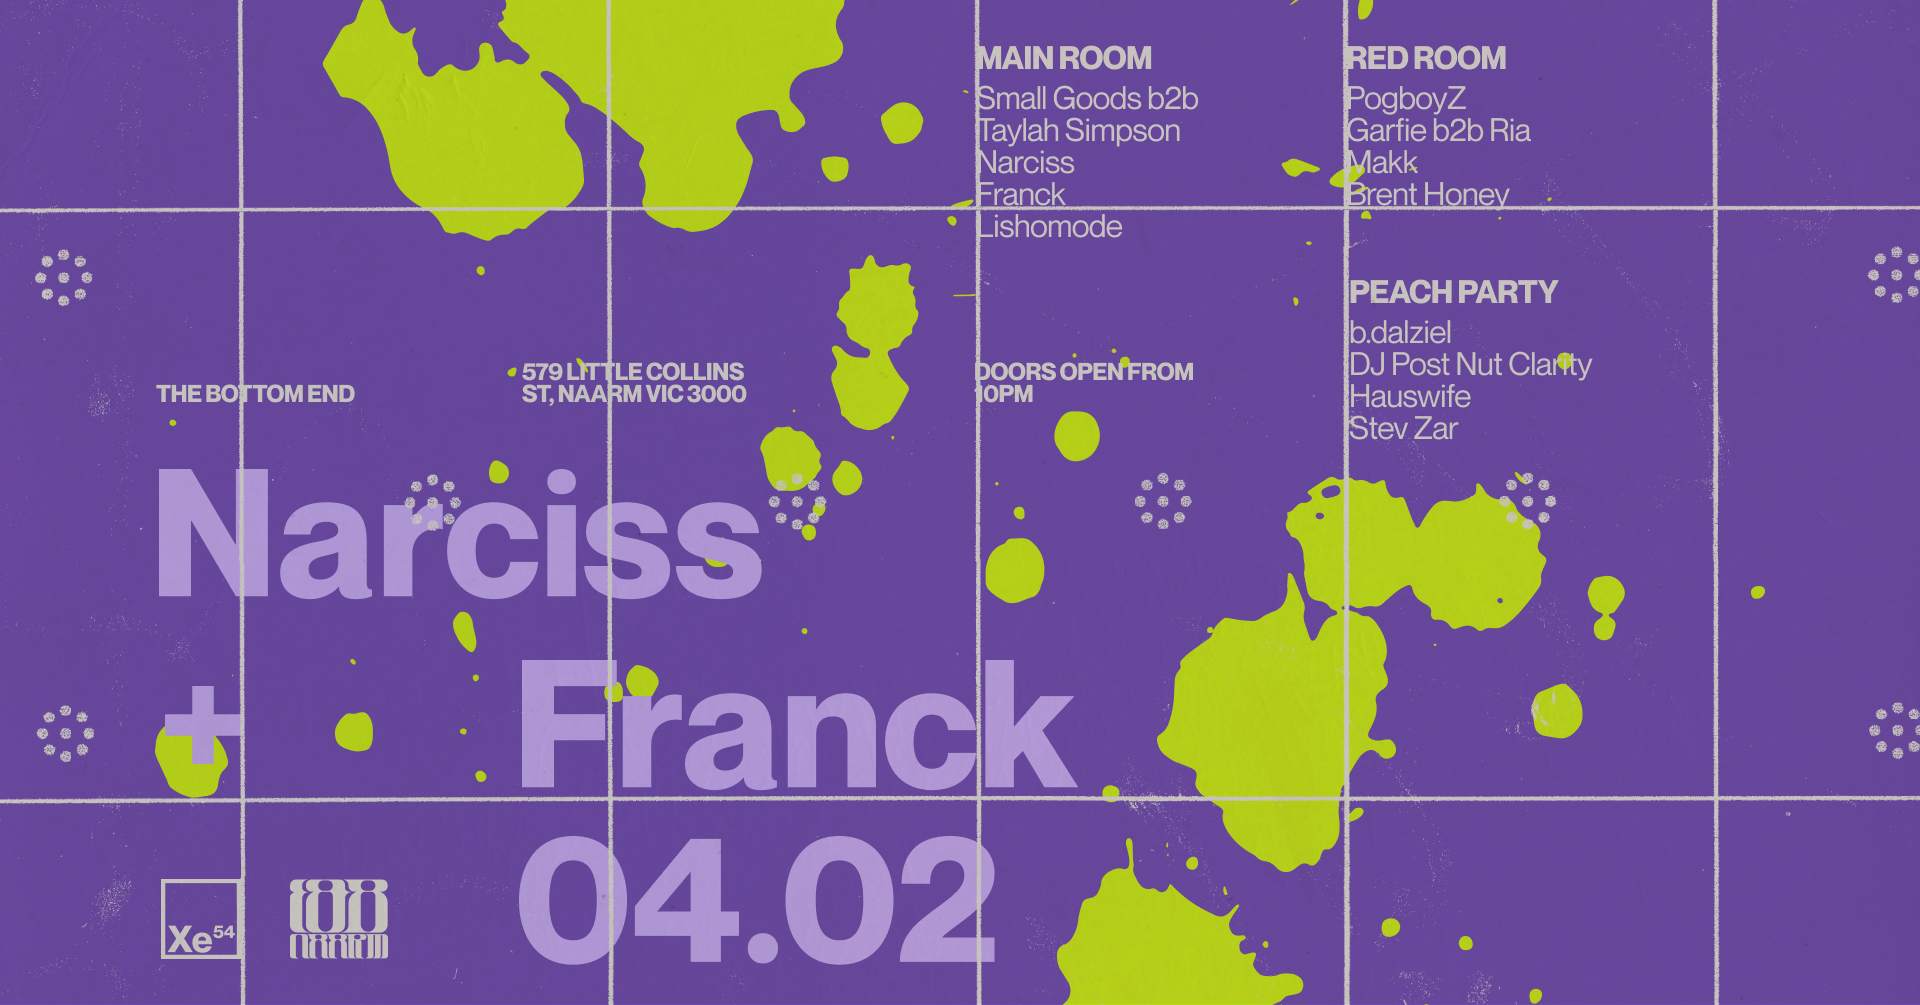 Xe54 ▬ Narciss + Franck - Página frontal